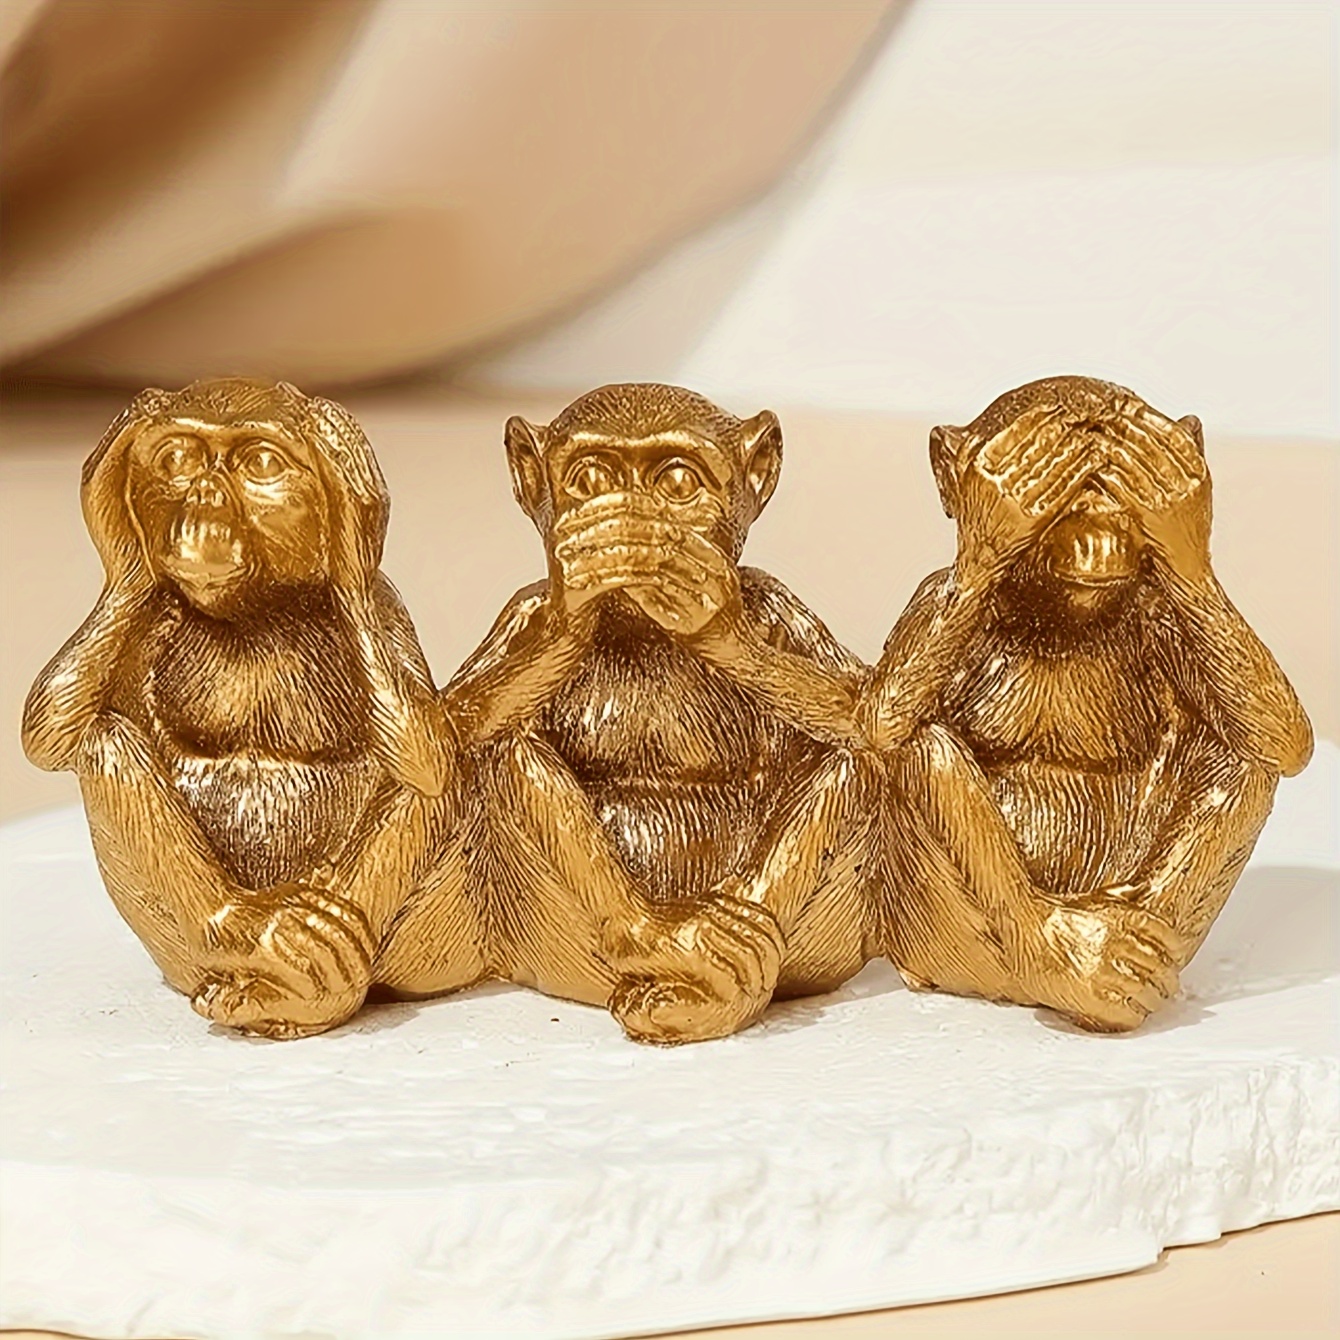 

1pc Golden Resin 3 Wise Monkeys Sculpture, Decorative Connected Monkey Figurines, "see No Evil, Hear No Evil, Speak No Evil" Desk Ornament For Modern Home Decor In Living Room, Bedroom, Dining Room